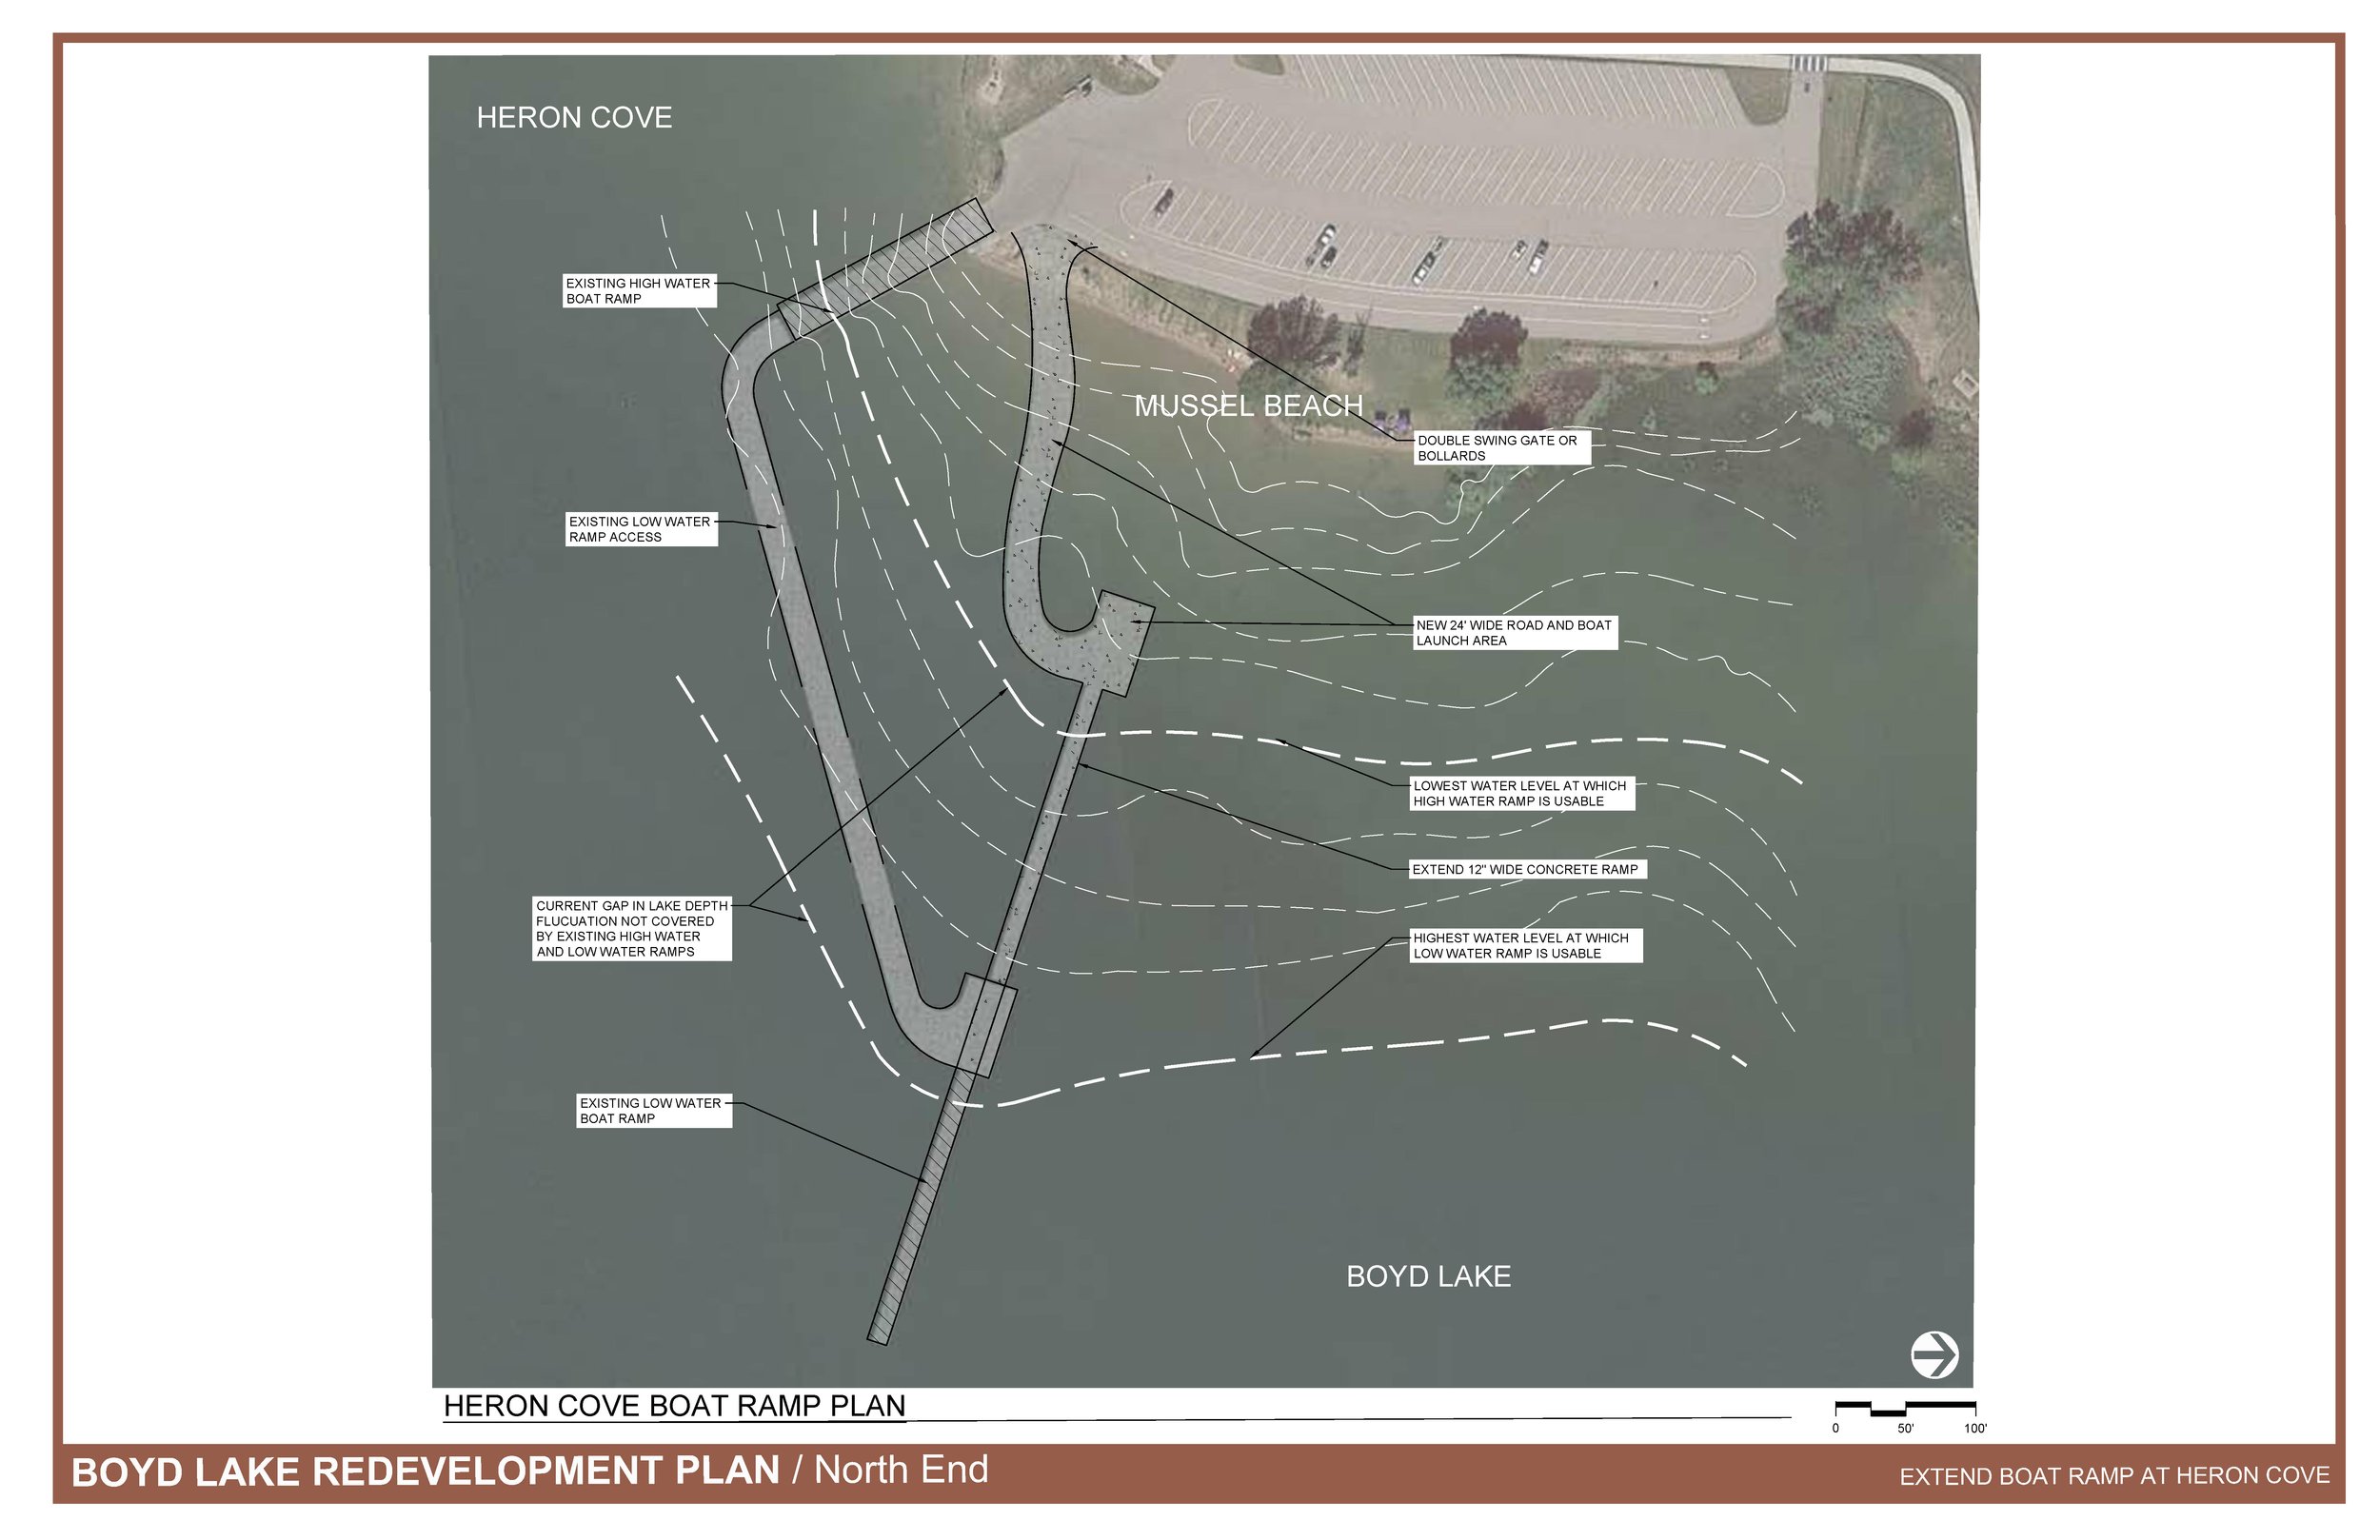 BL_Final Redevelopment Report-Heron Cove Boat Ramp.jpg